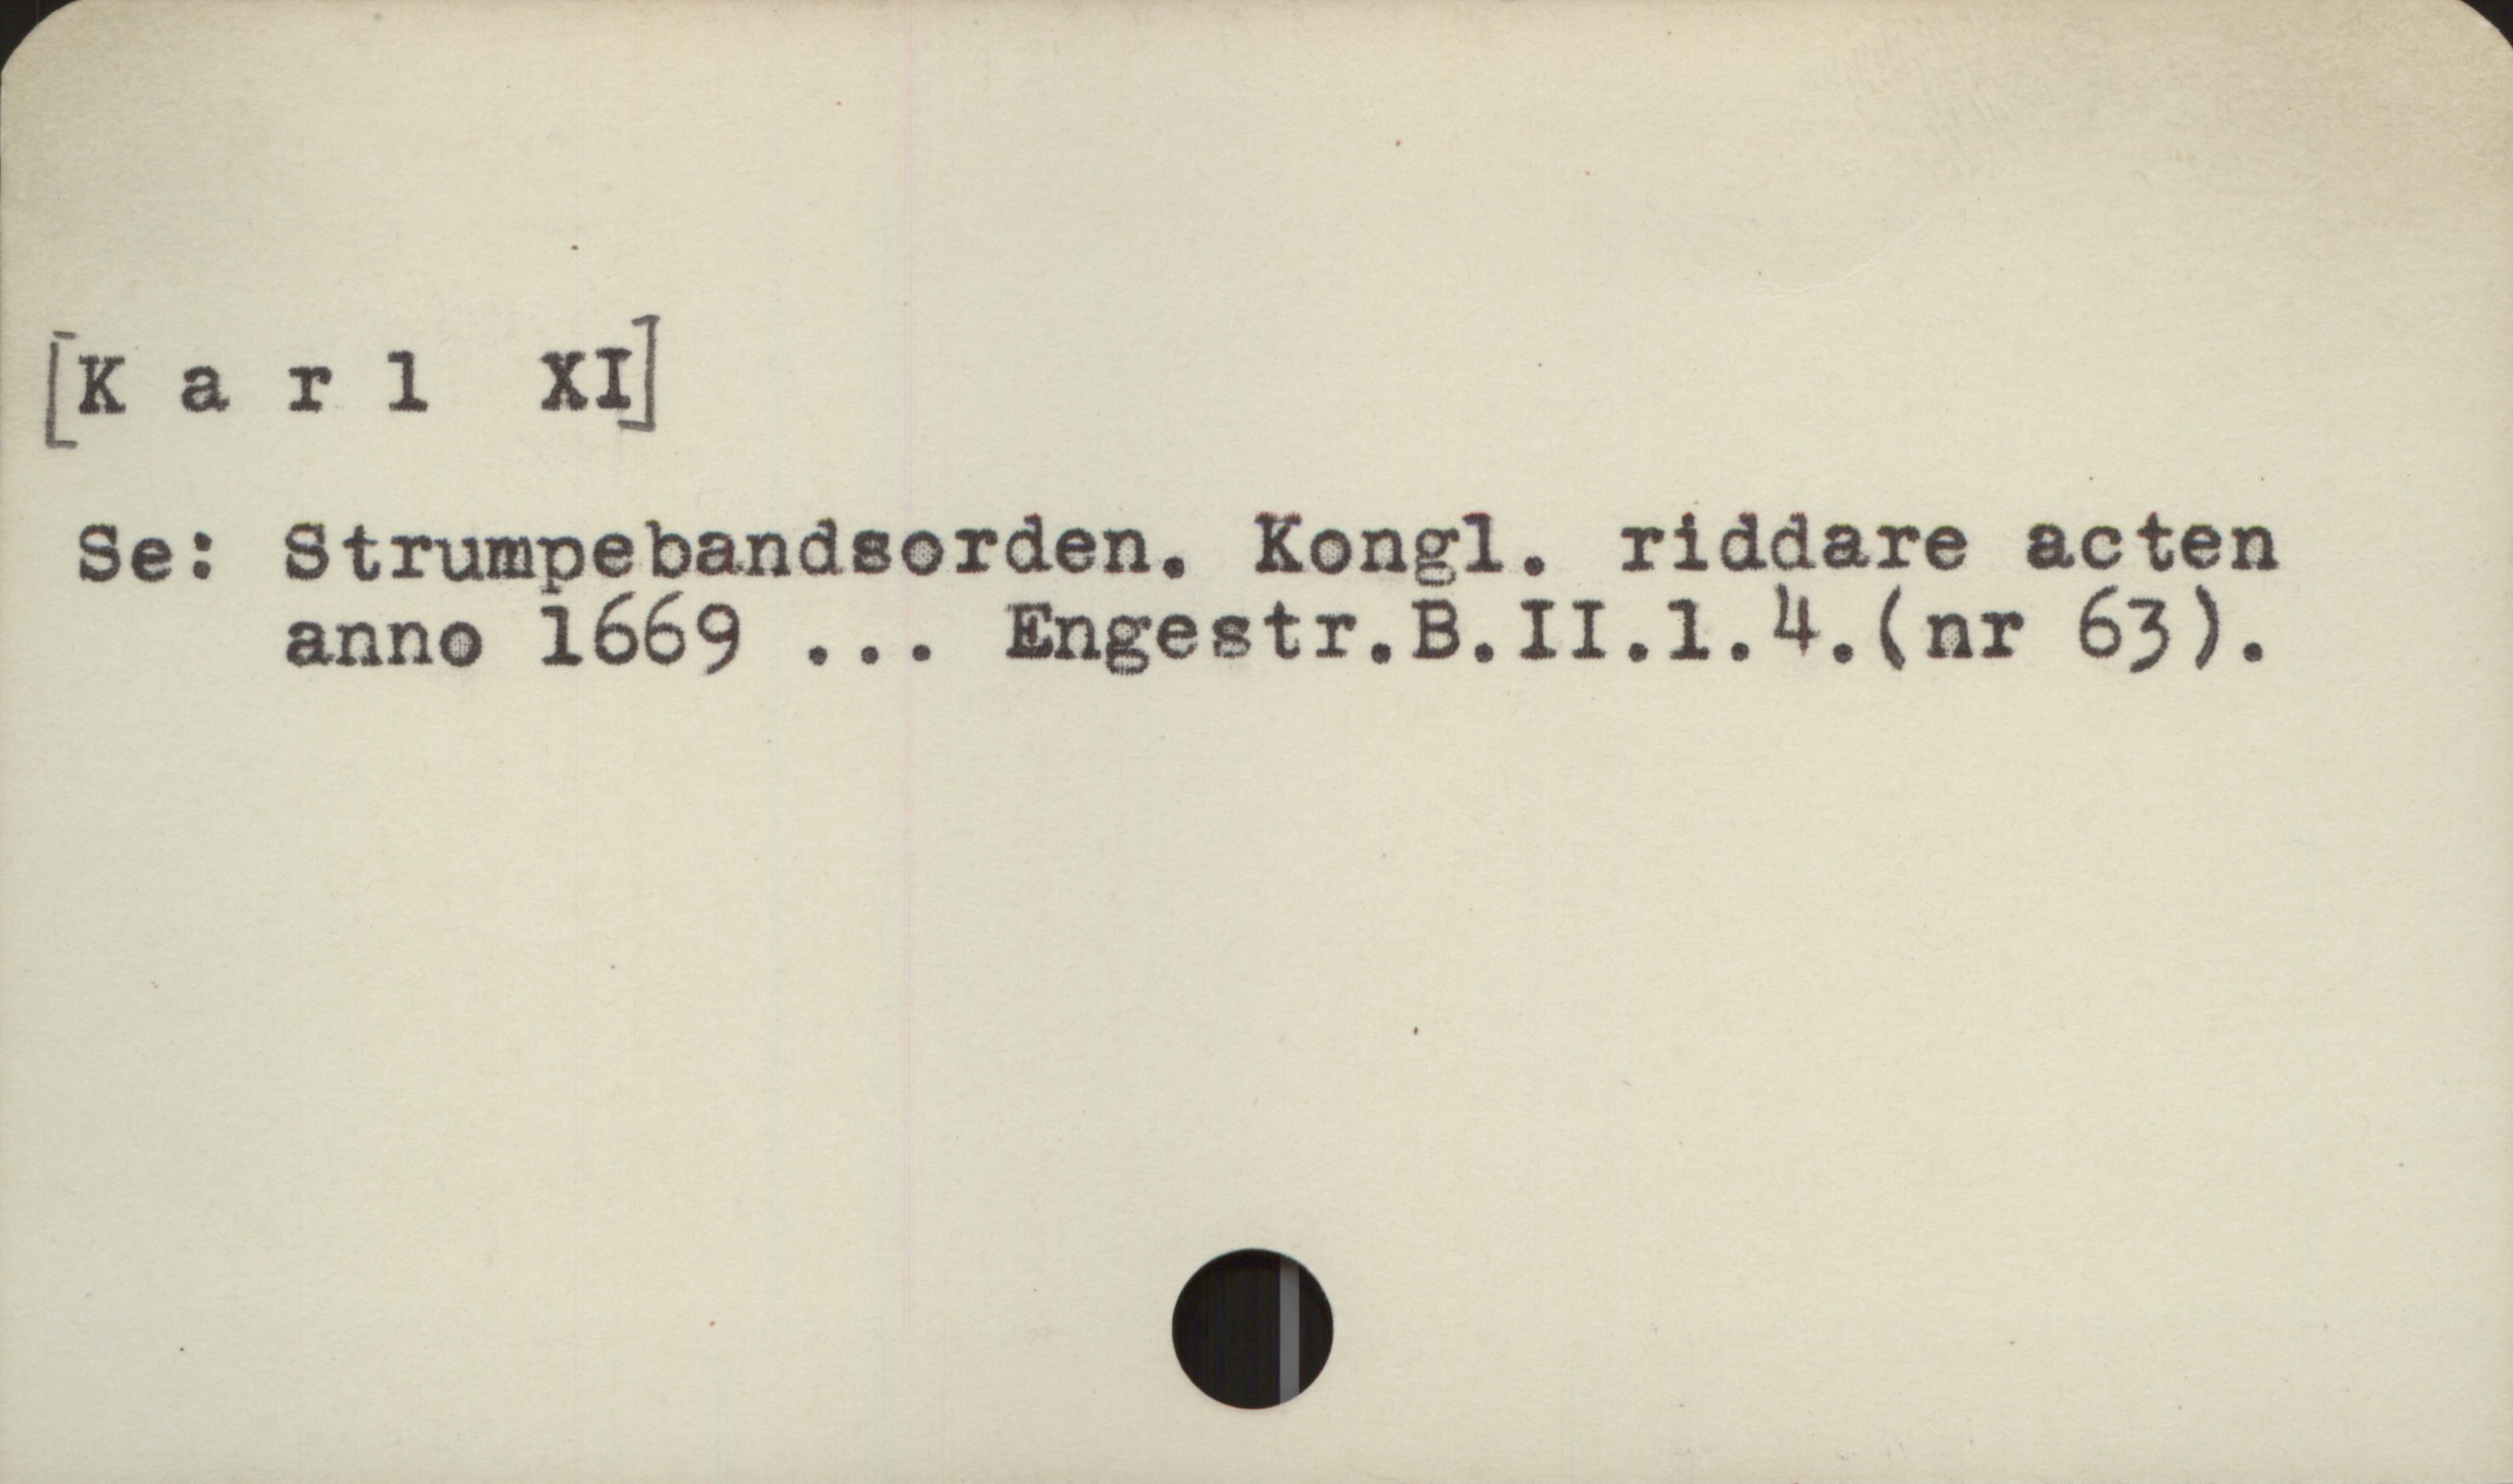  (Karl XI] -
Se: Strumpebandsorden, Kongl. riddare acten
anno 1669 ... Engestr.B.Il.1.4.(nr 63).

